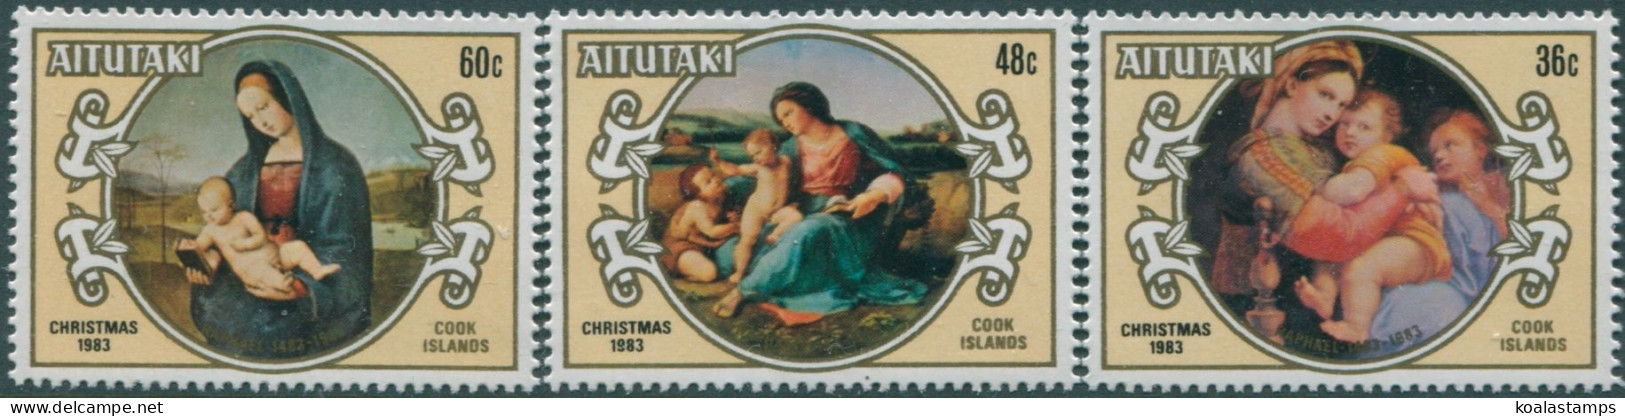 Aitutaki 1983 SG470-472 Christmas Set MLH - Cook